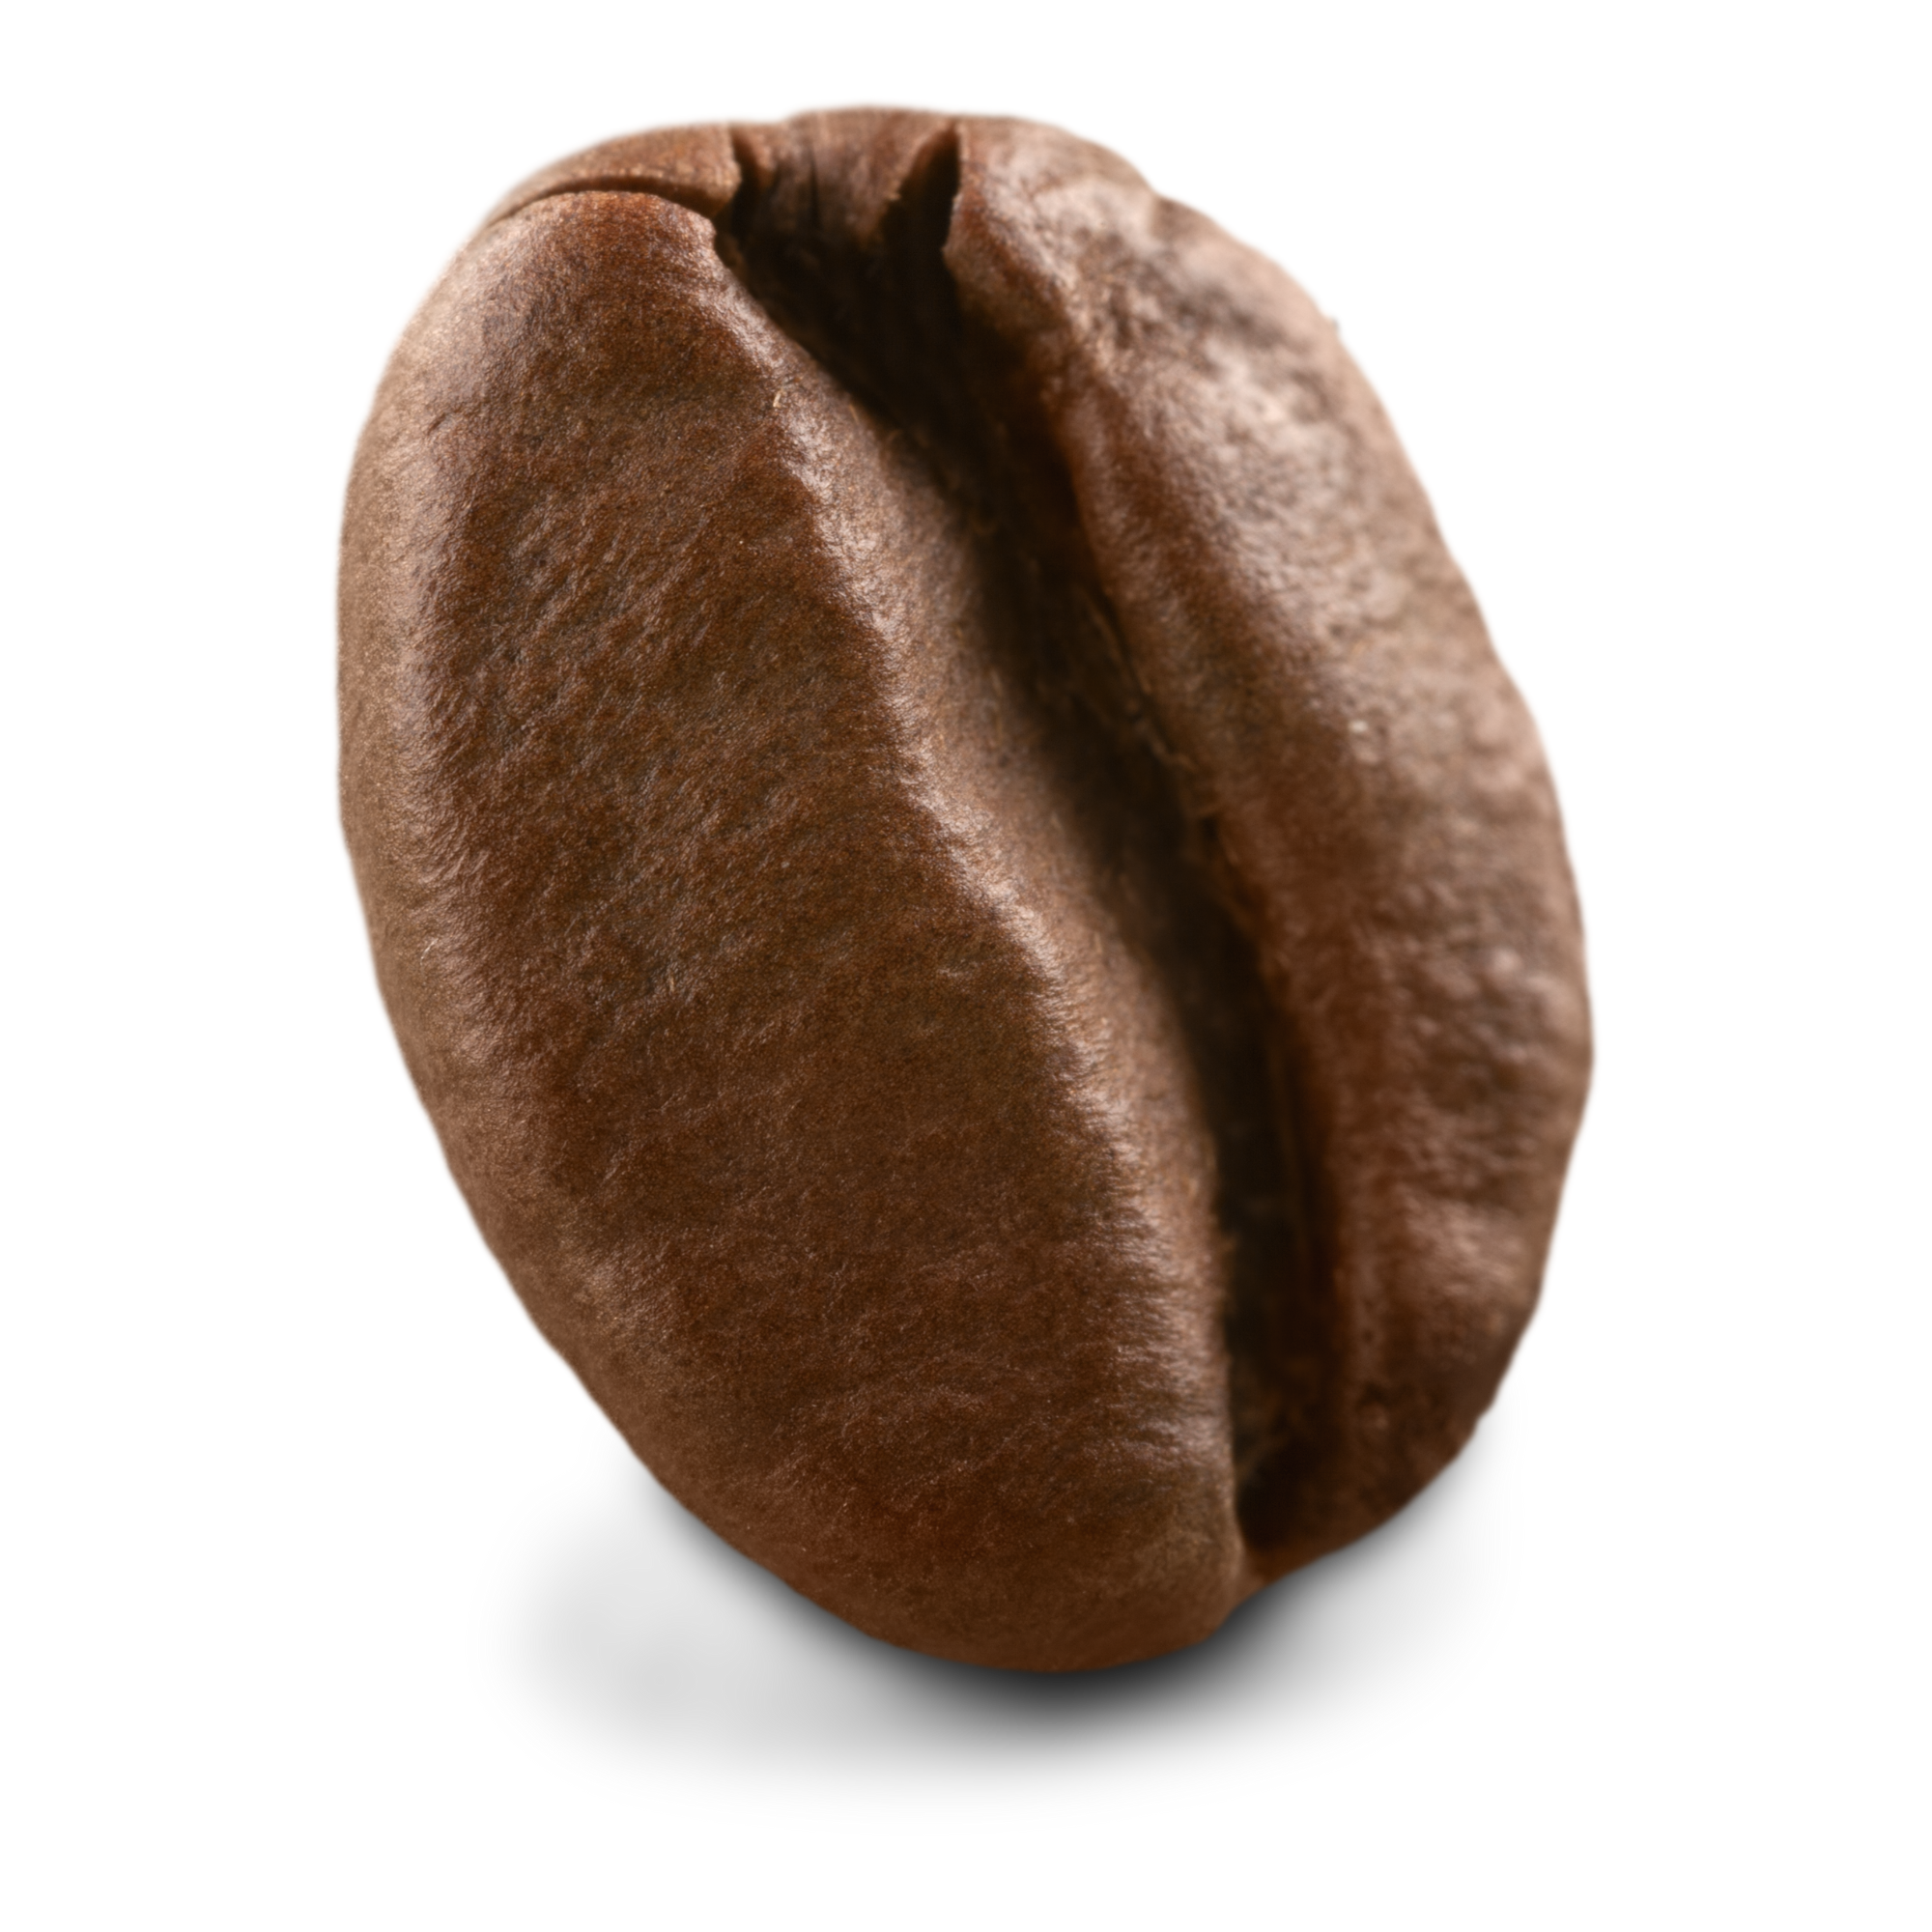 Ultra close up image of a single medium roast coffee bean